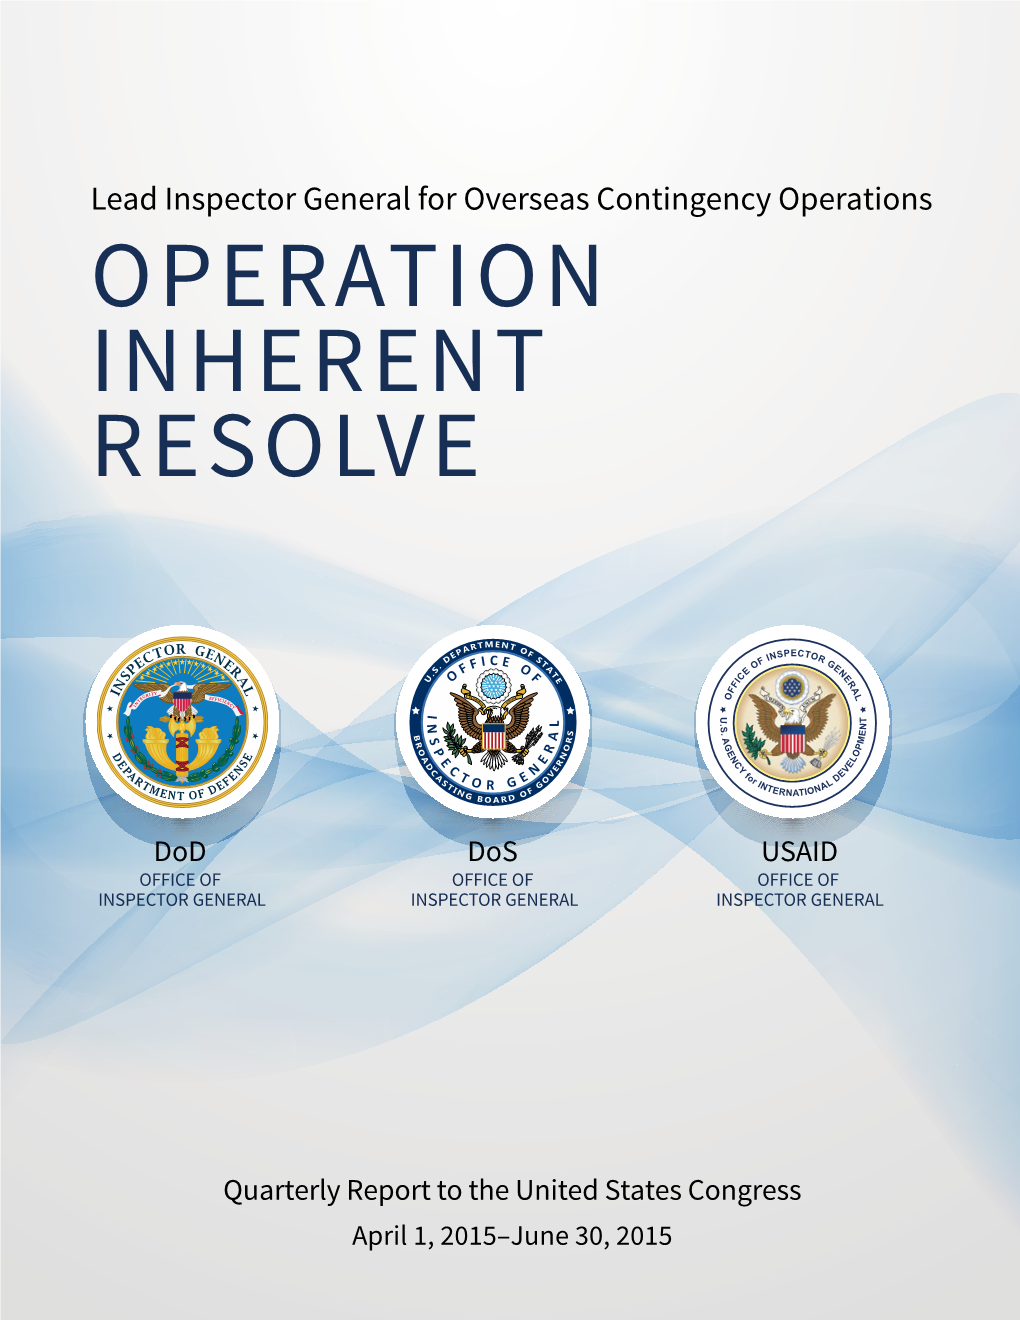 LIG-OCO Operation Inherent Resolve Quarterly Report to the United